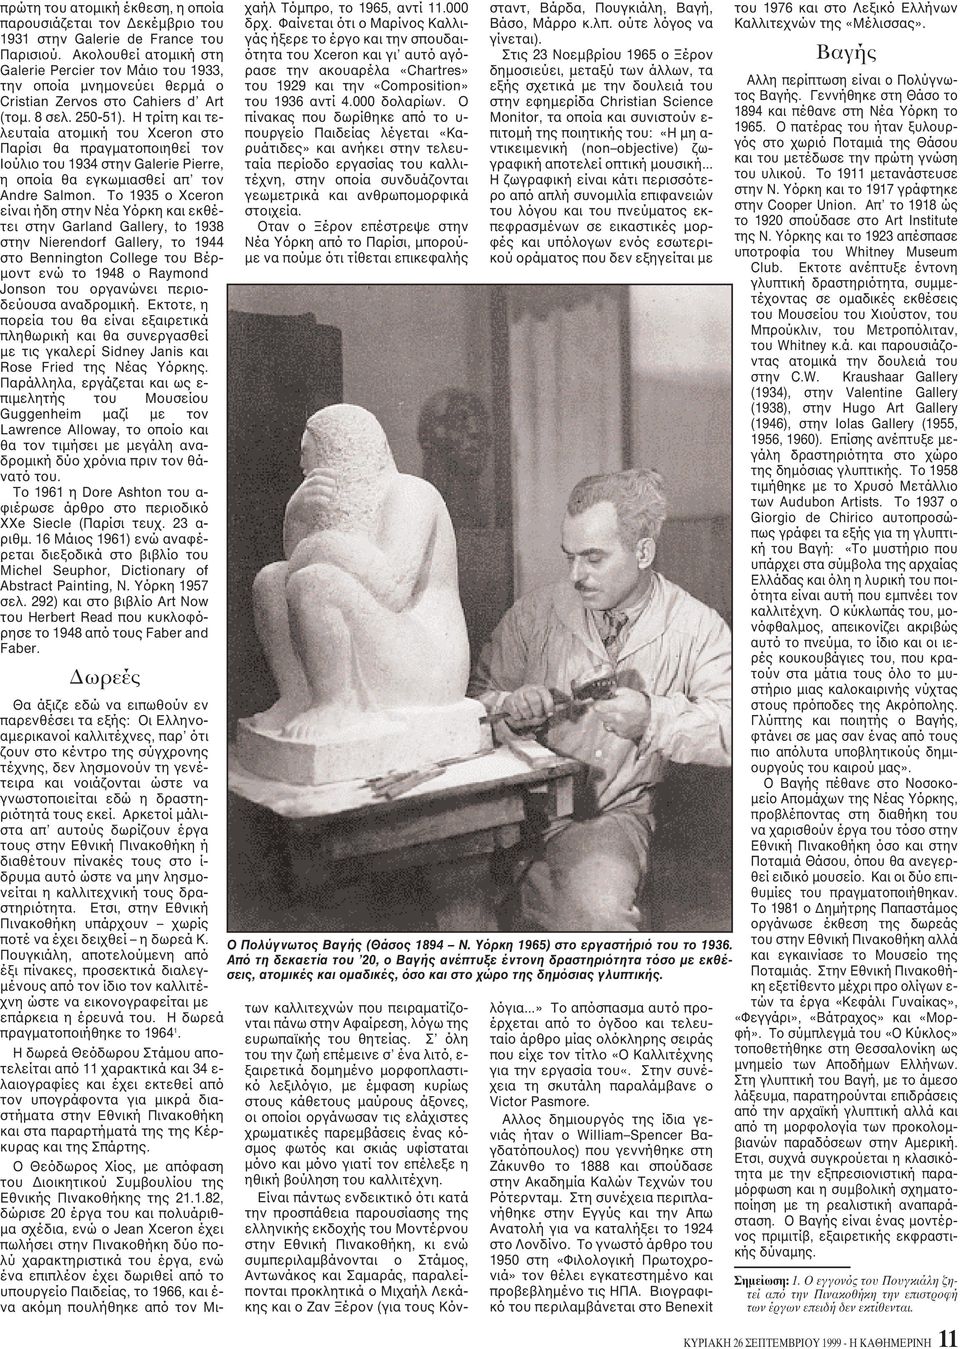 H τρίτη και τελευταία ατομική του Xceron στο Παρίσι θα πραγματοποιηθεί τον Iούλιο του 1934 στην Galerie Pierre, η οποία θα εγκωμιασθεί απ τον Andre Salmon.